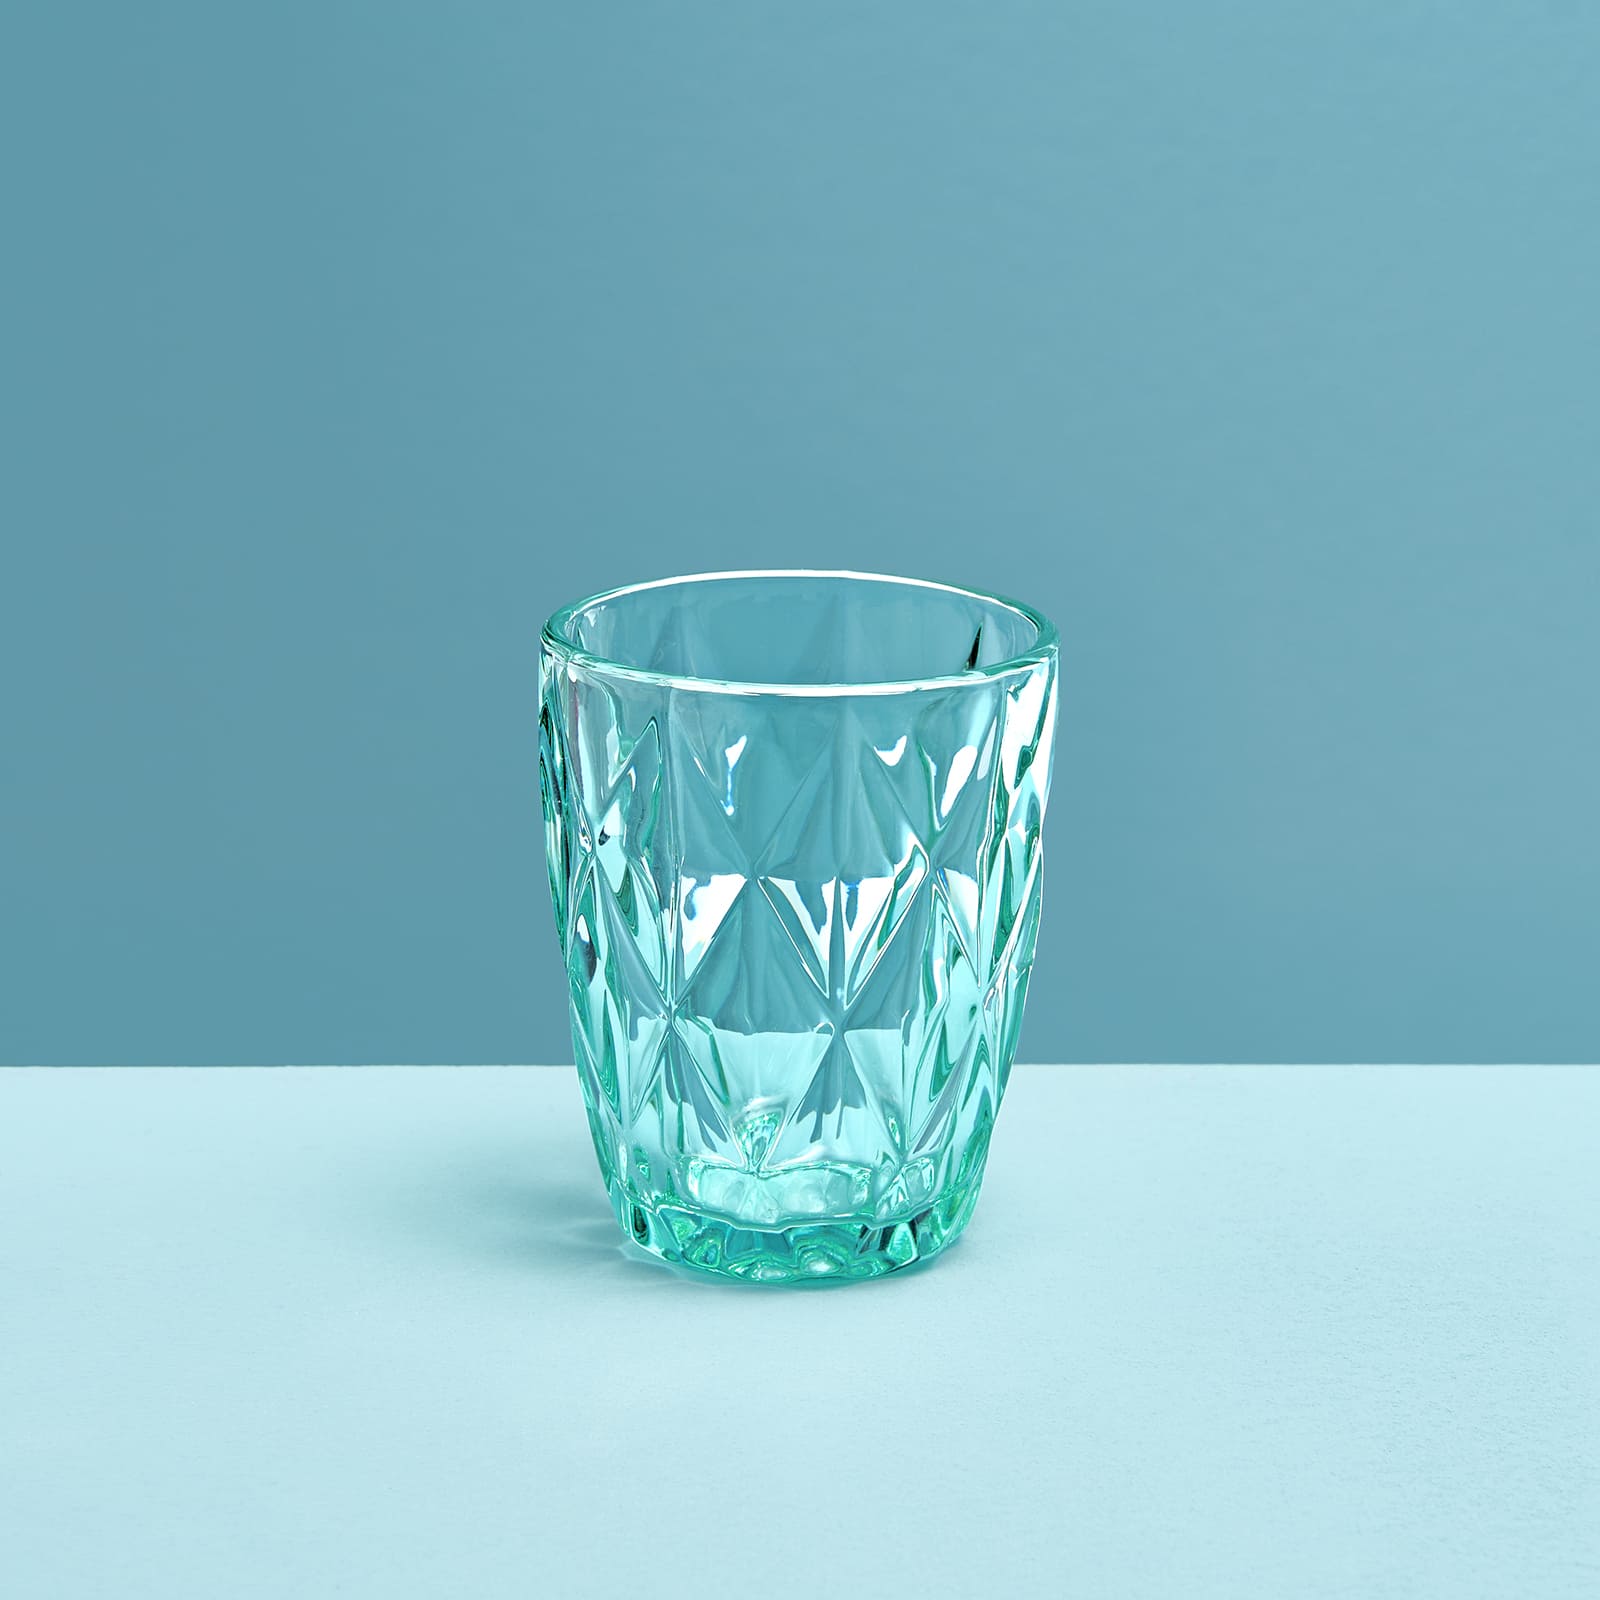 4er-Set Wasserglas, türkis, Glas, 8x10 cm